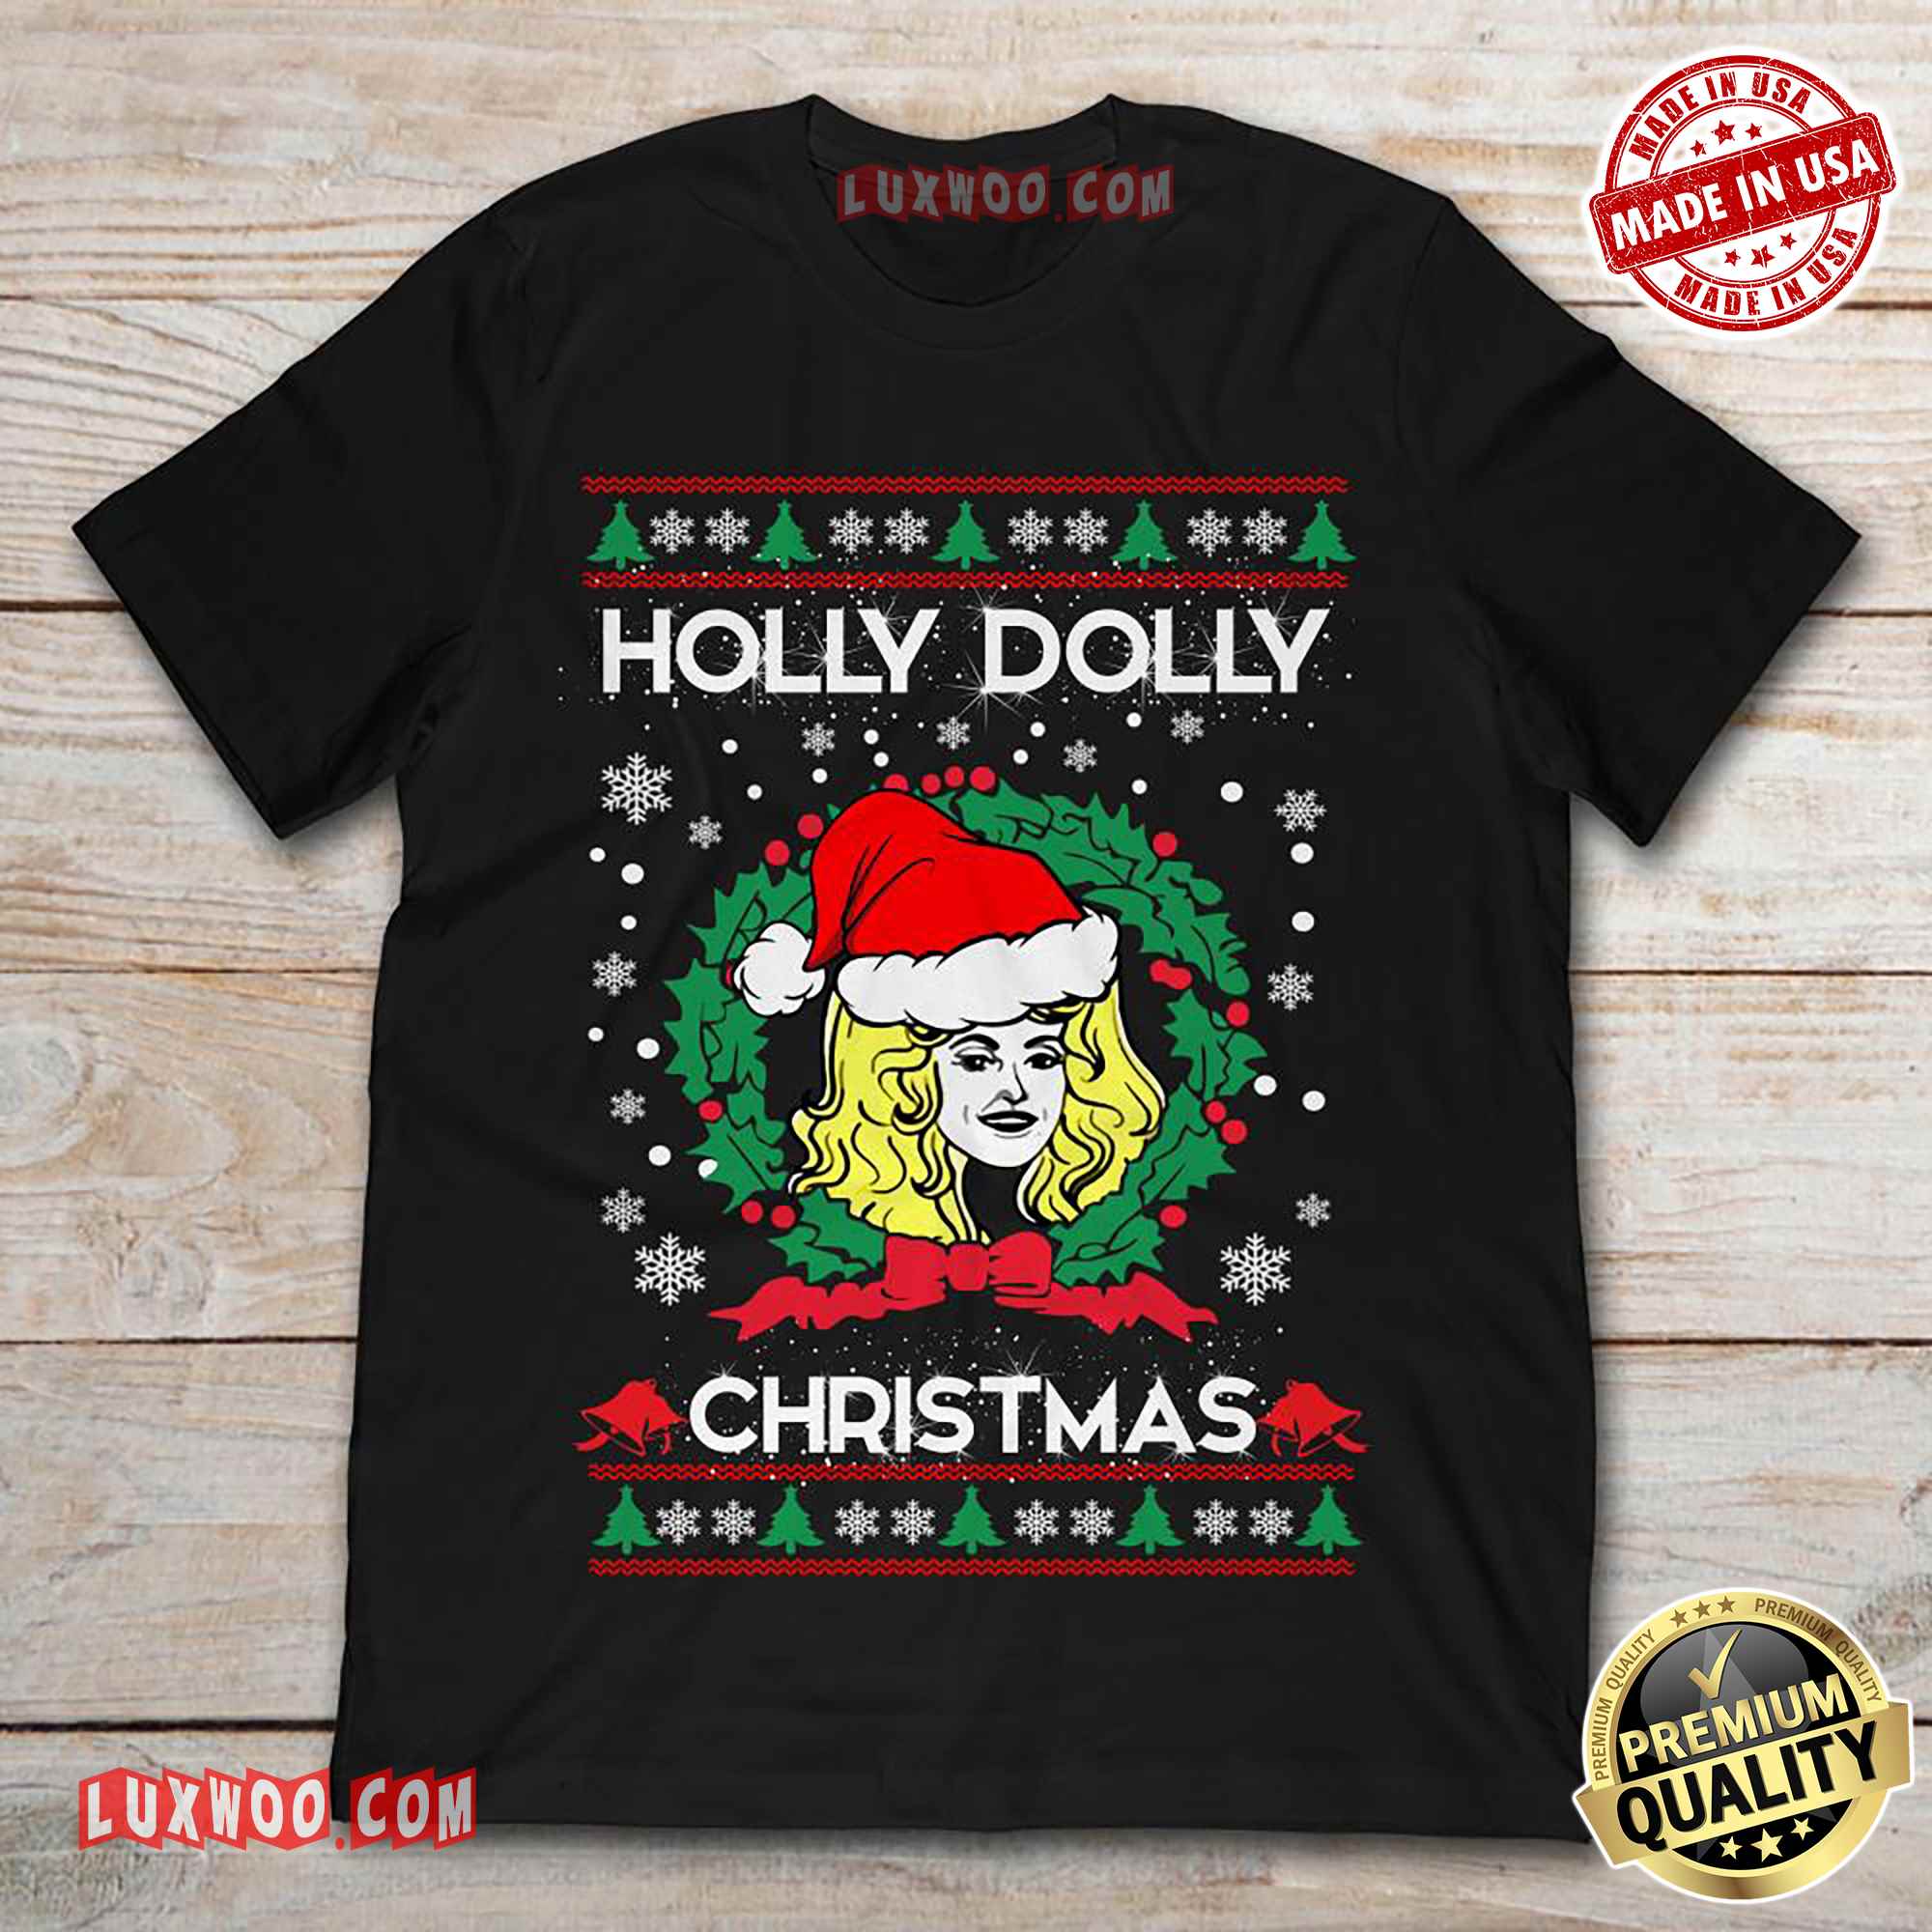 Holly Dolly Christmas Tee Shirt